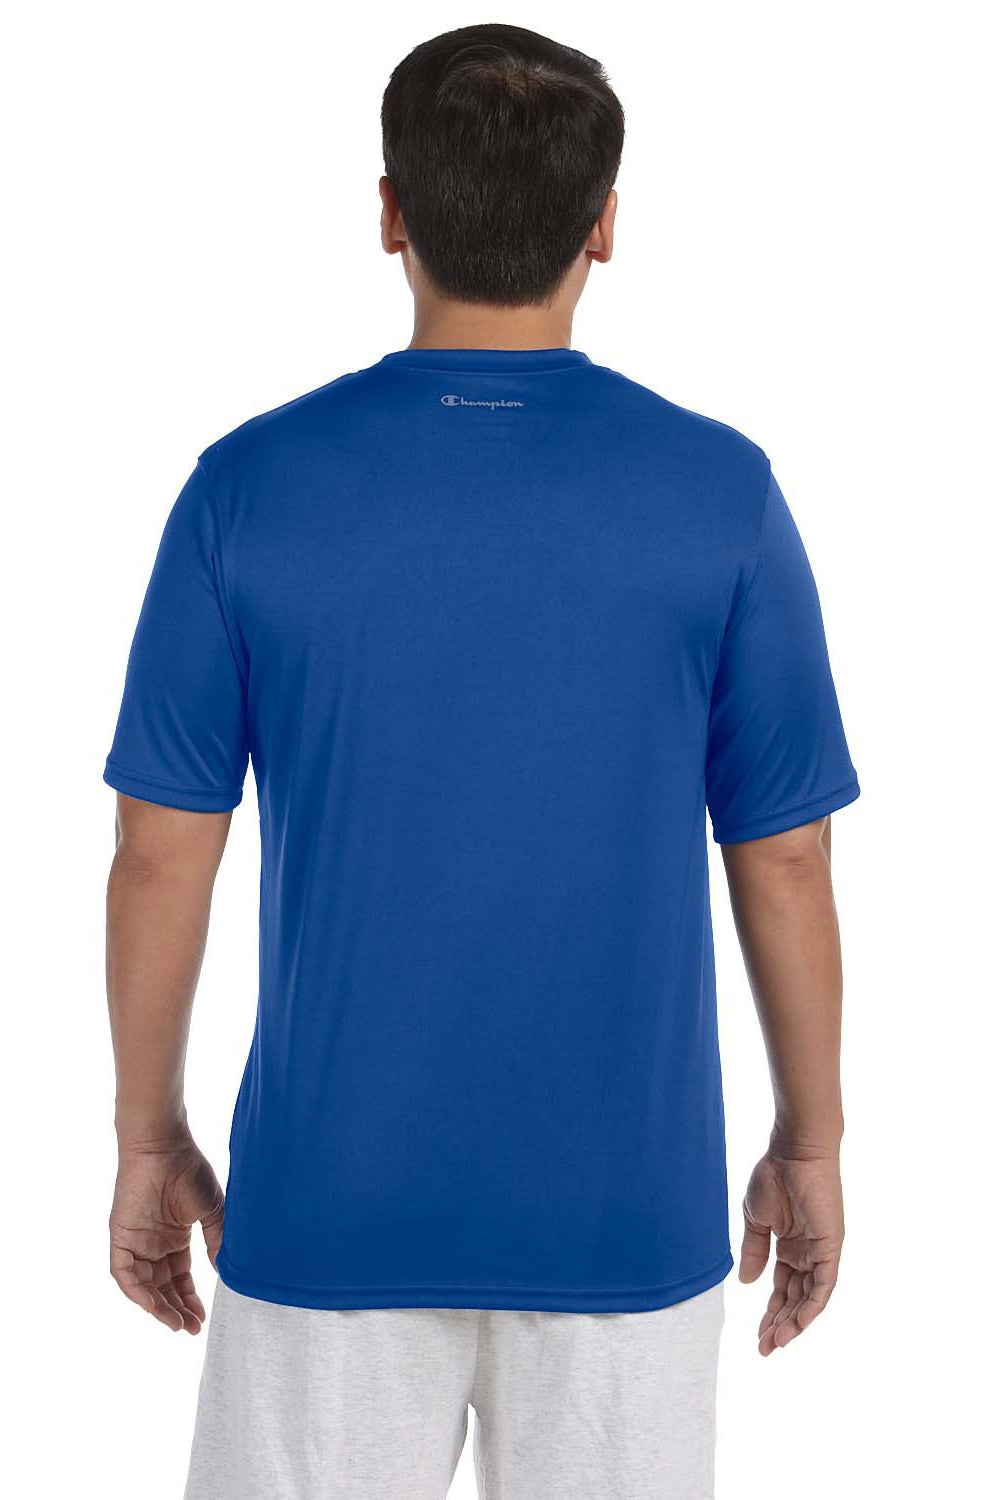 Champion CW22 Mens Double Dry Moisture Wicking Short Sleeve Crewneck T-Shirt Royal Blue Back